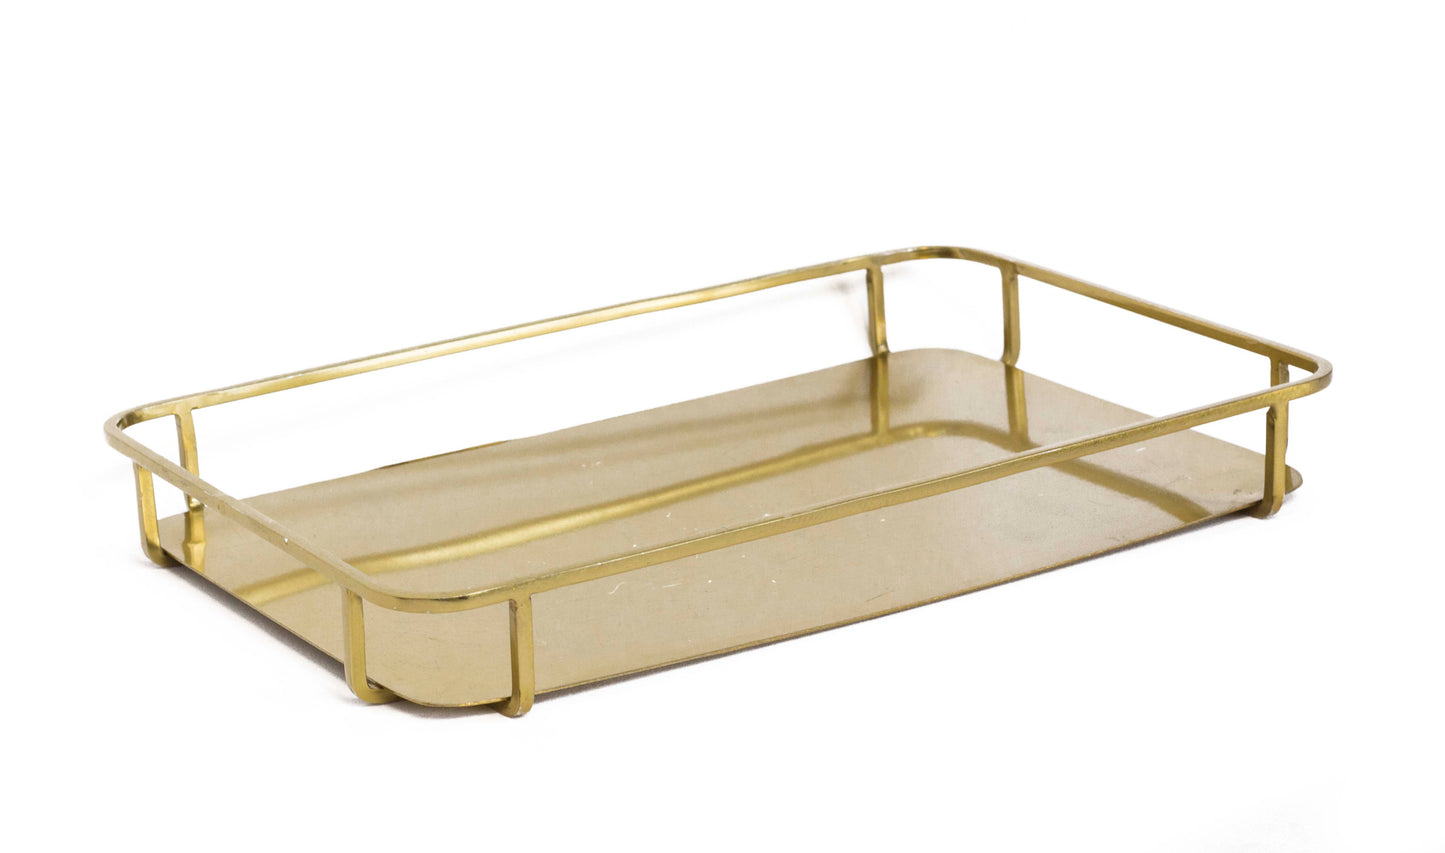 A golden tray